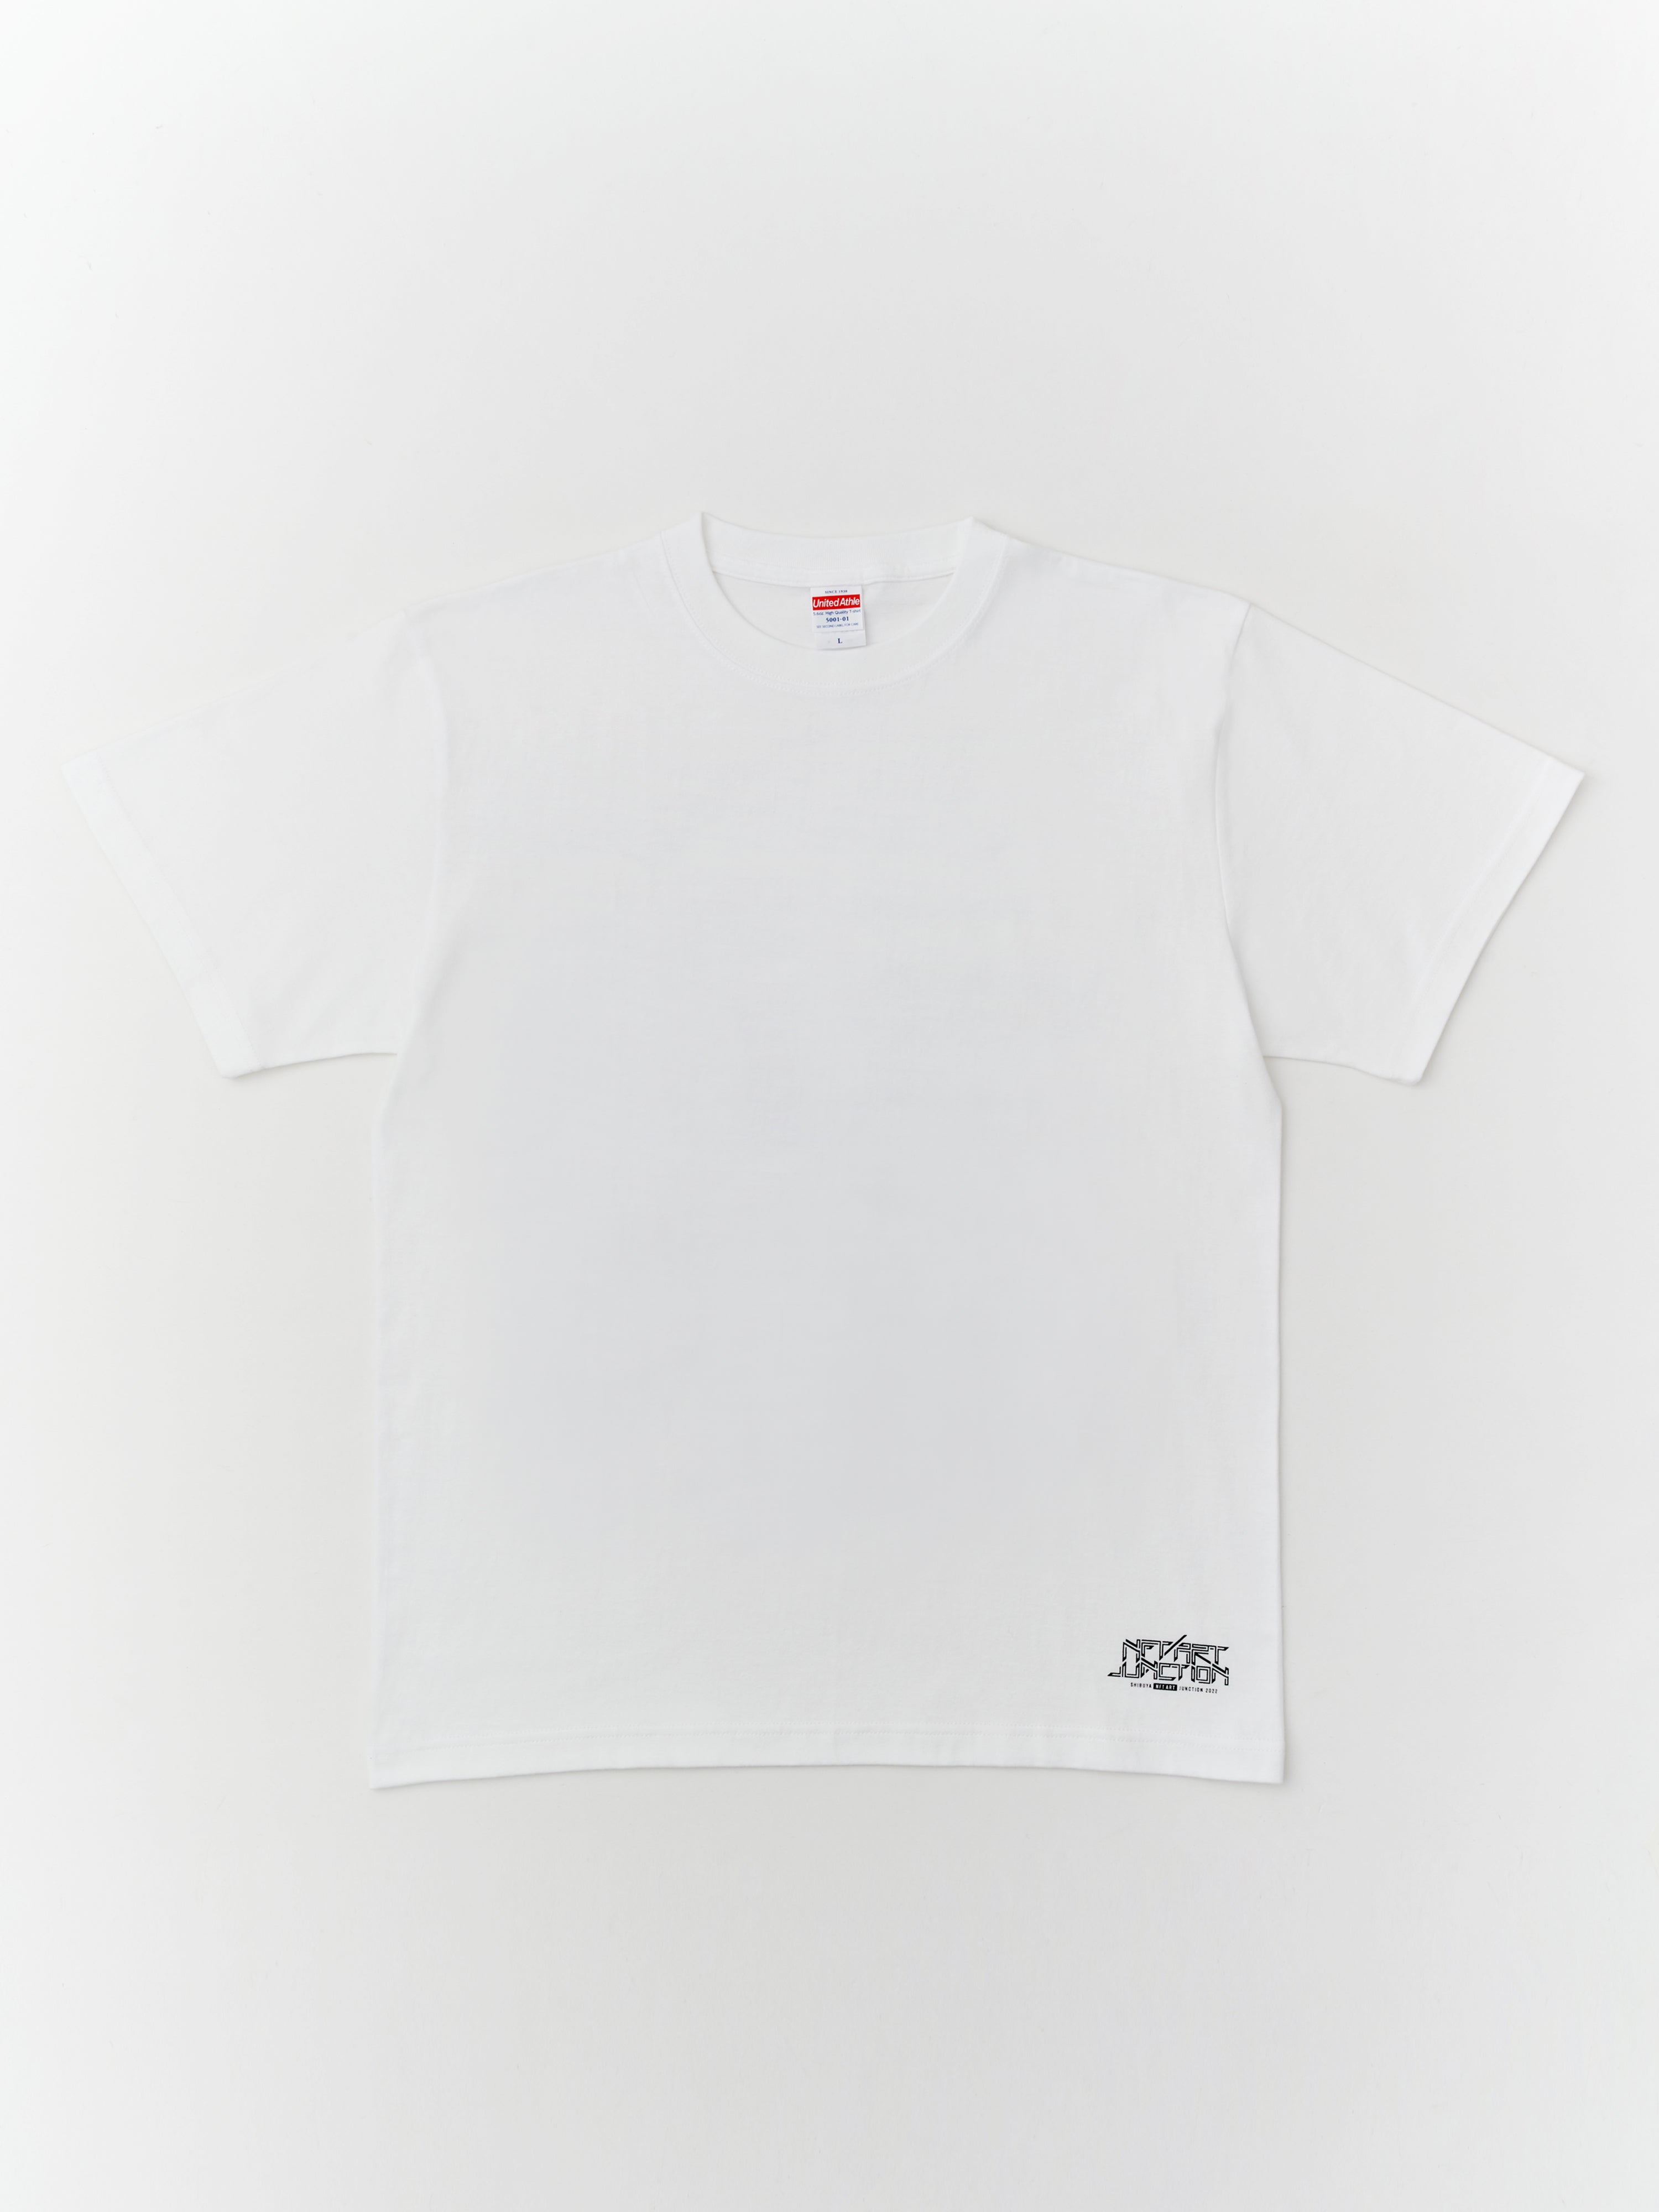 Art t-shirts 01 (teashi. K)